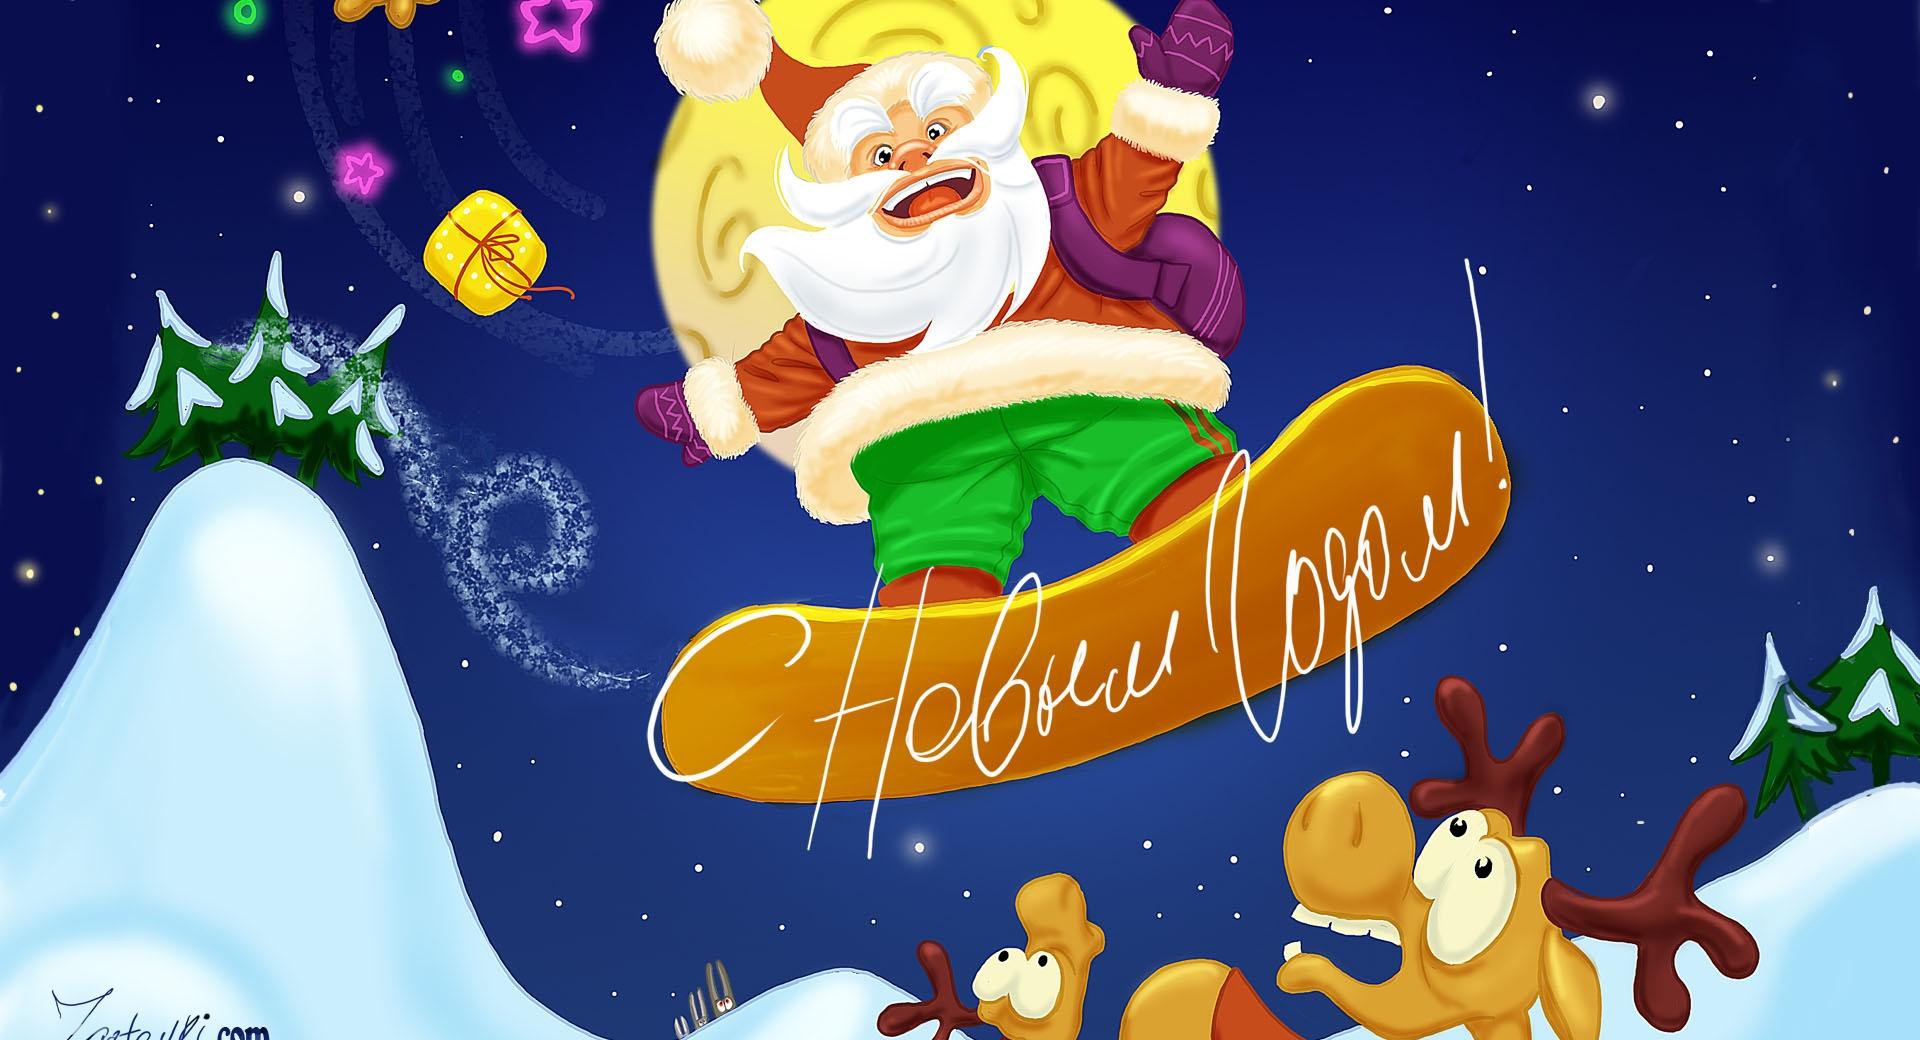 Funny Santa Claus Christmas at 2048 x 2048 iPad size wallpapers HD quality